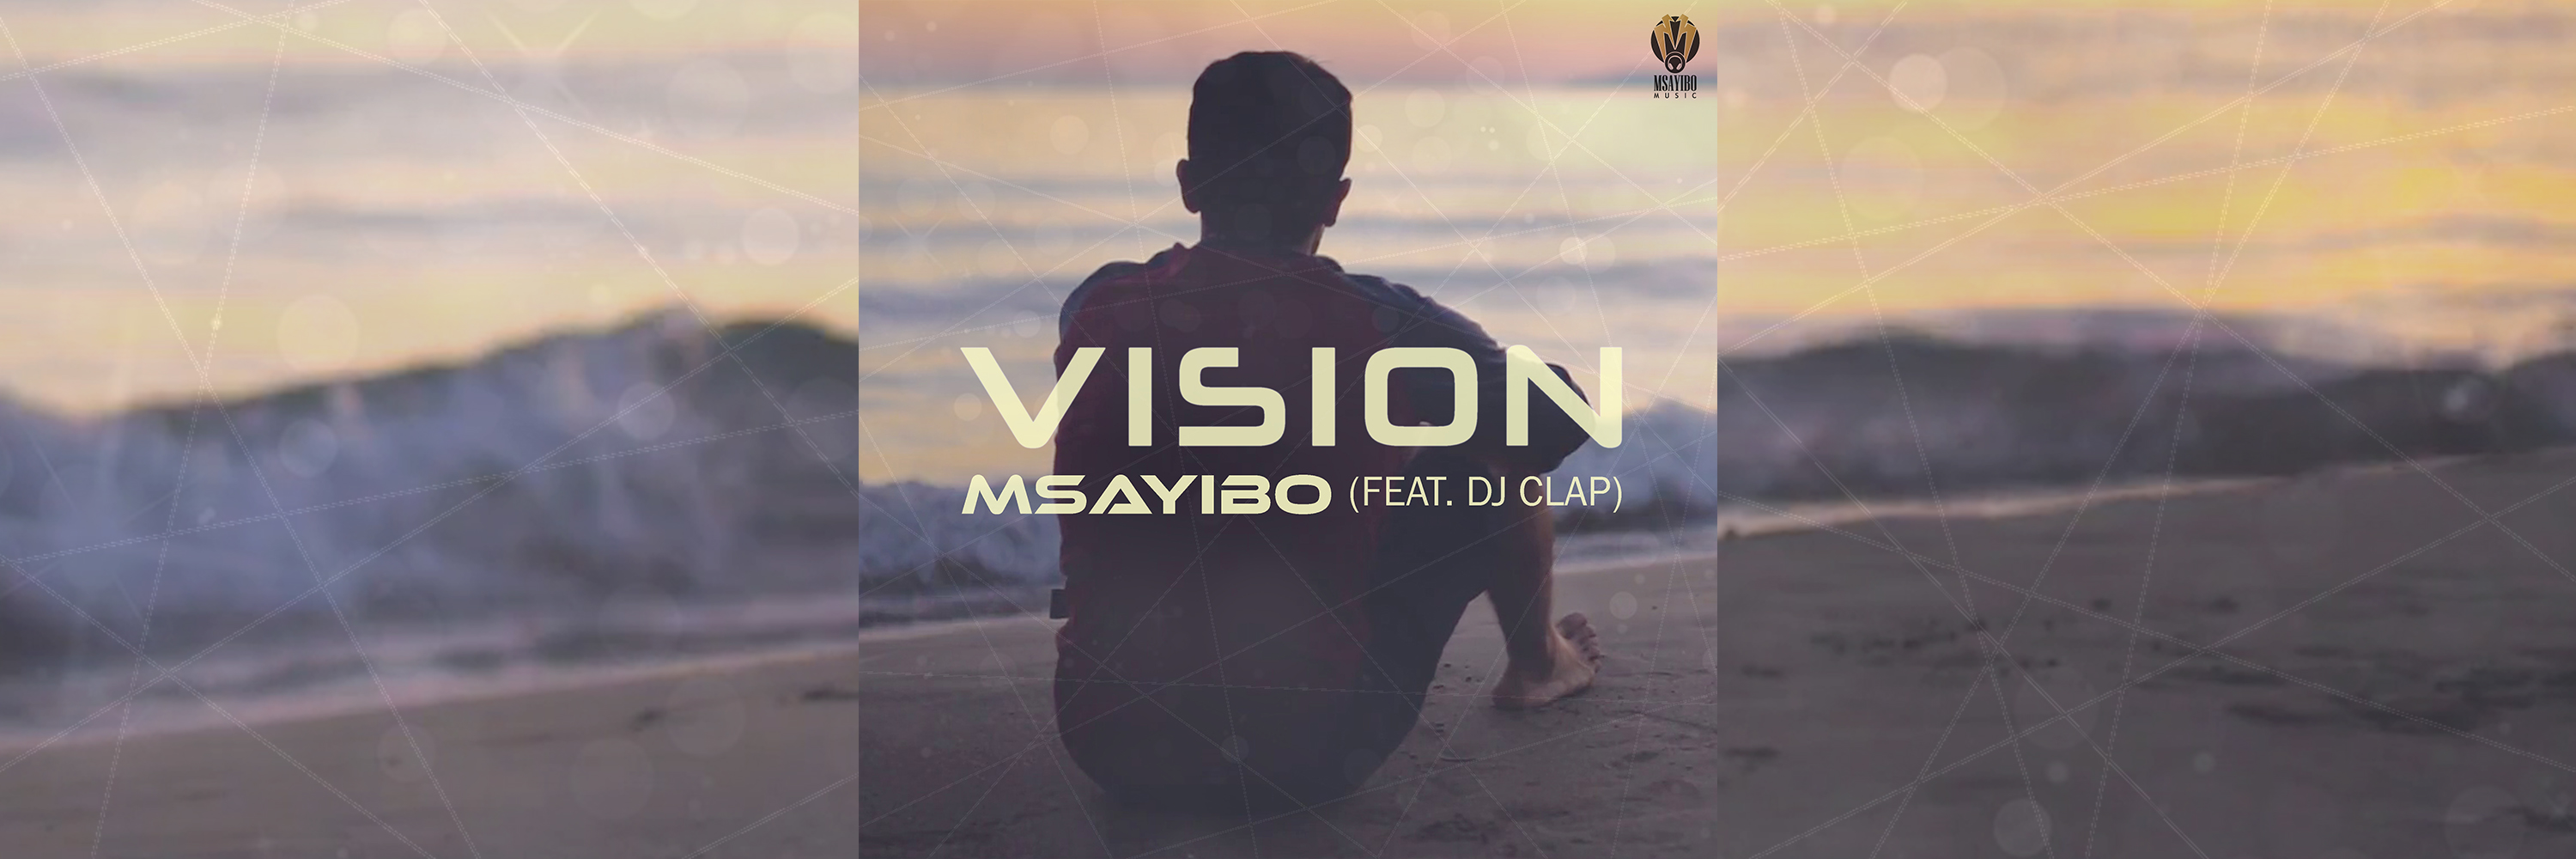 Msayibo - Vision [Slider]